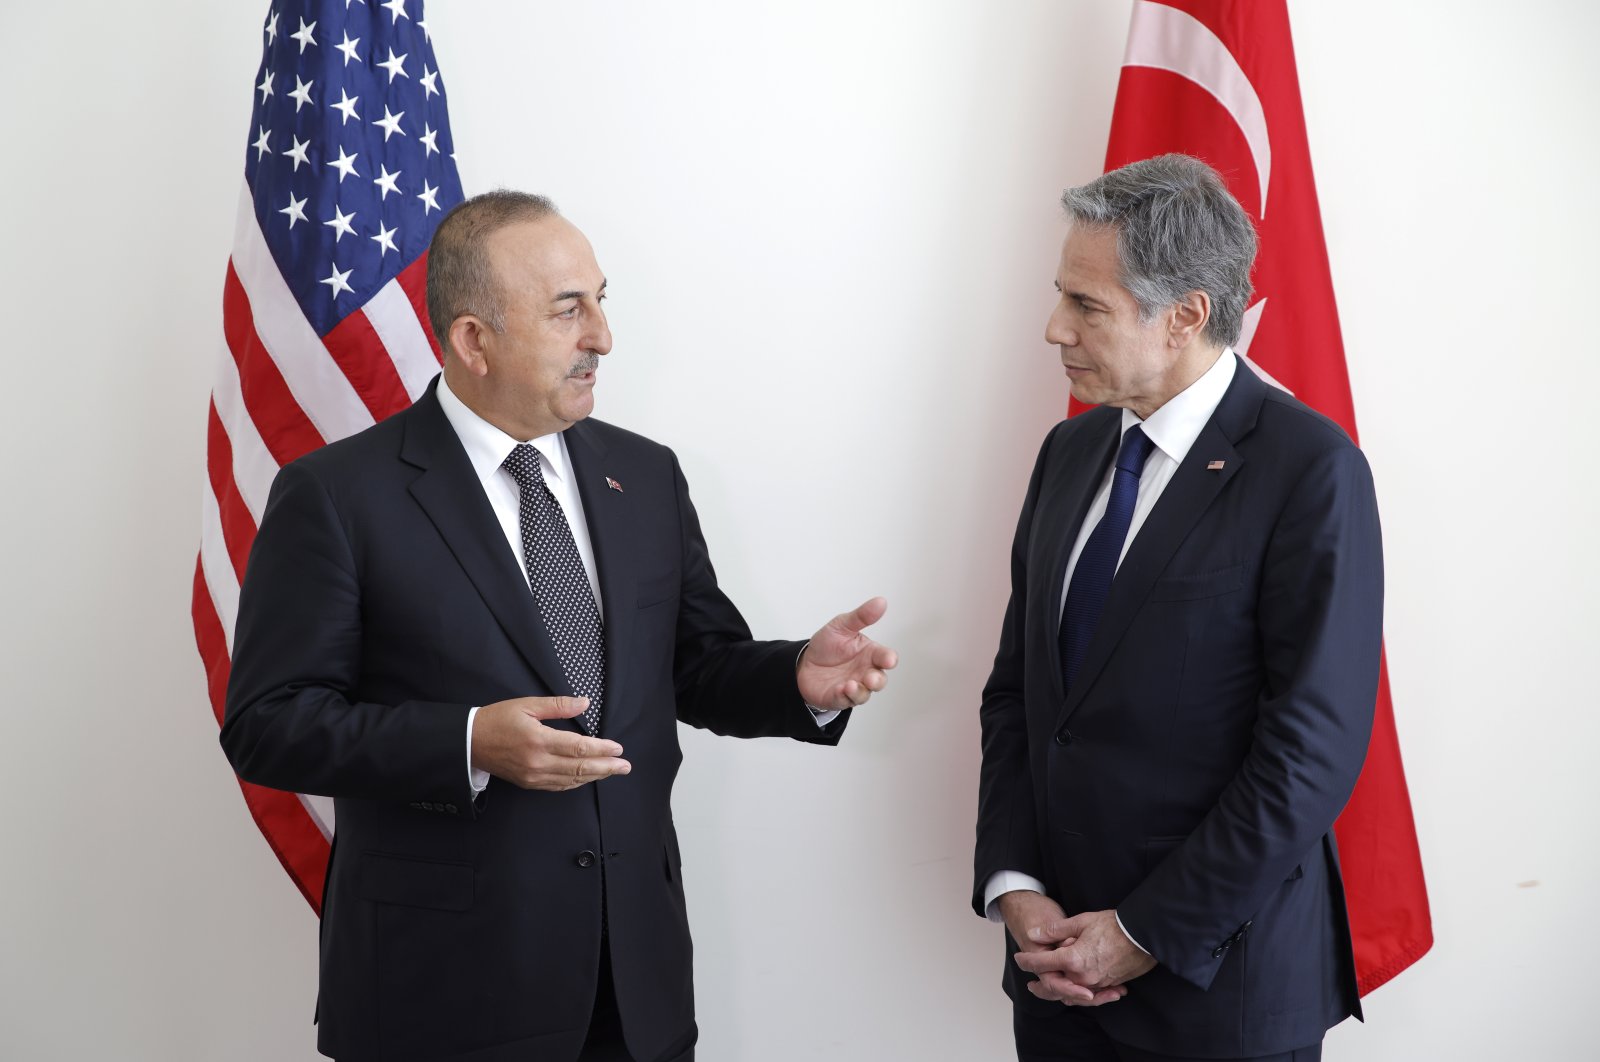 Çavuşoğlu, Blinken confirm will for closer Turkey-US cooperation